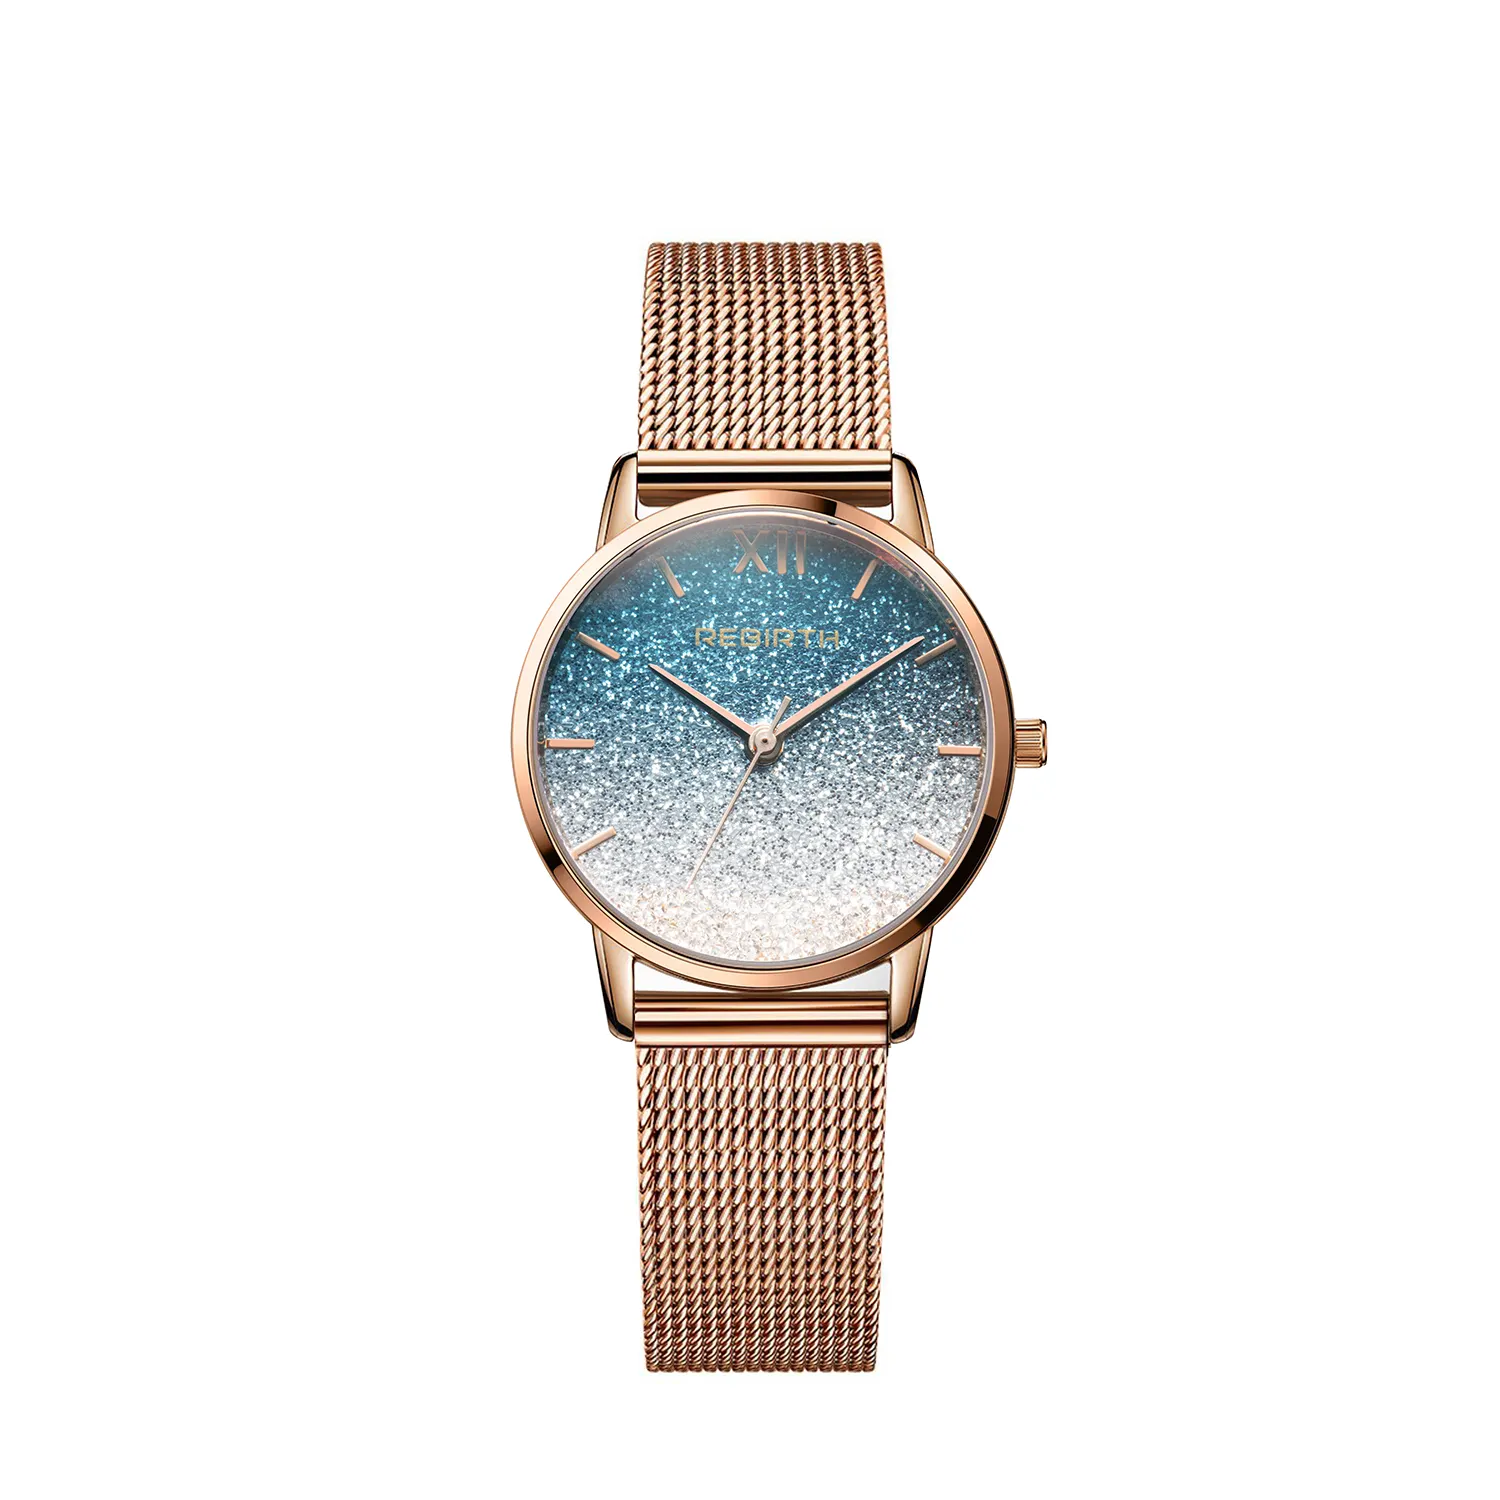 REBIRTH RE2013 elegant rose gold women quartz watch hot sale Mesh band Waterproof analog display Ultra thin Casual watch design